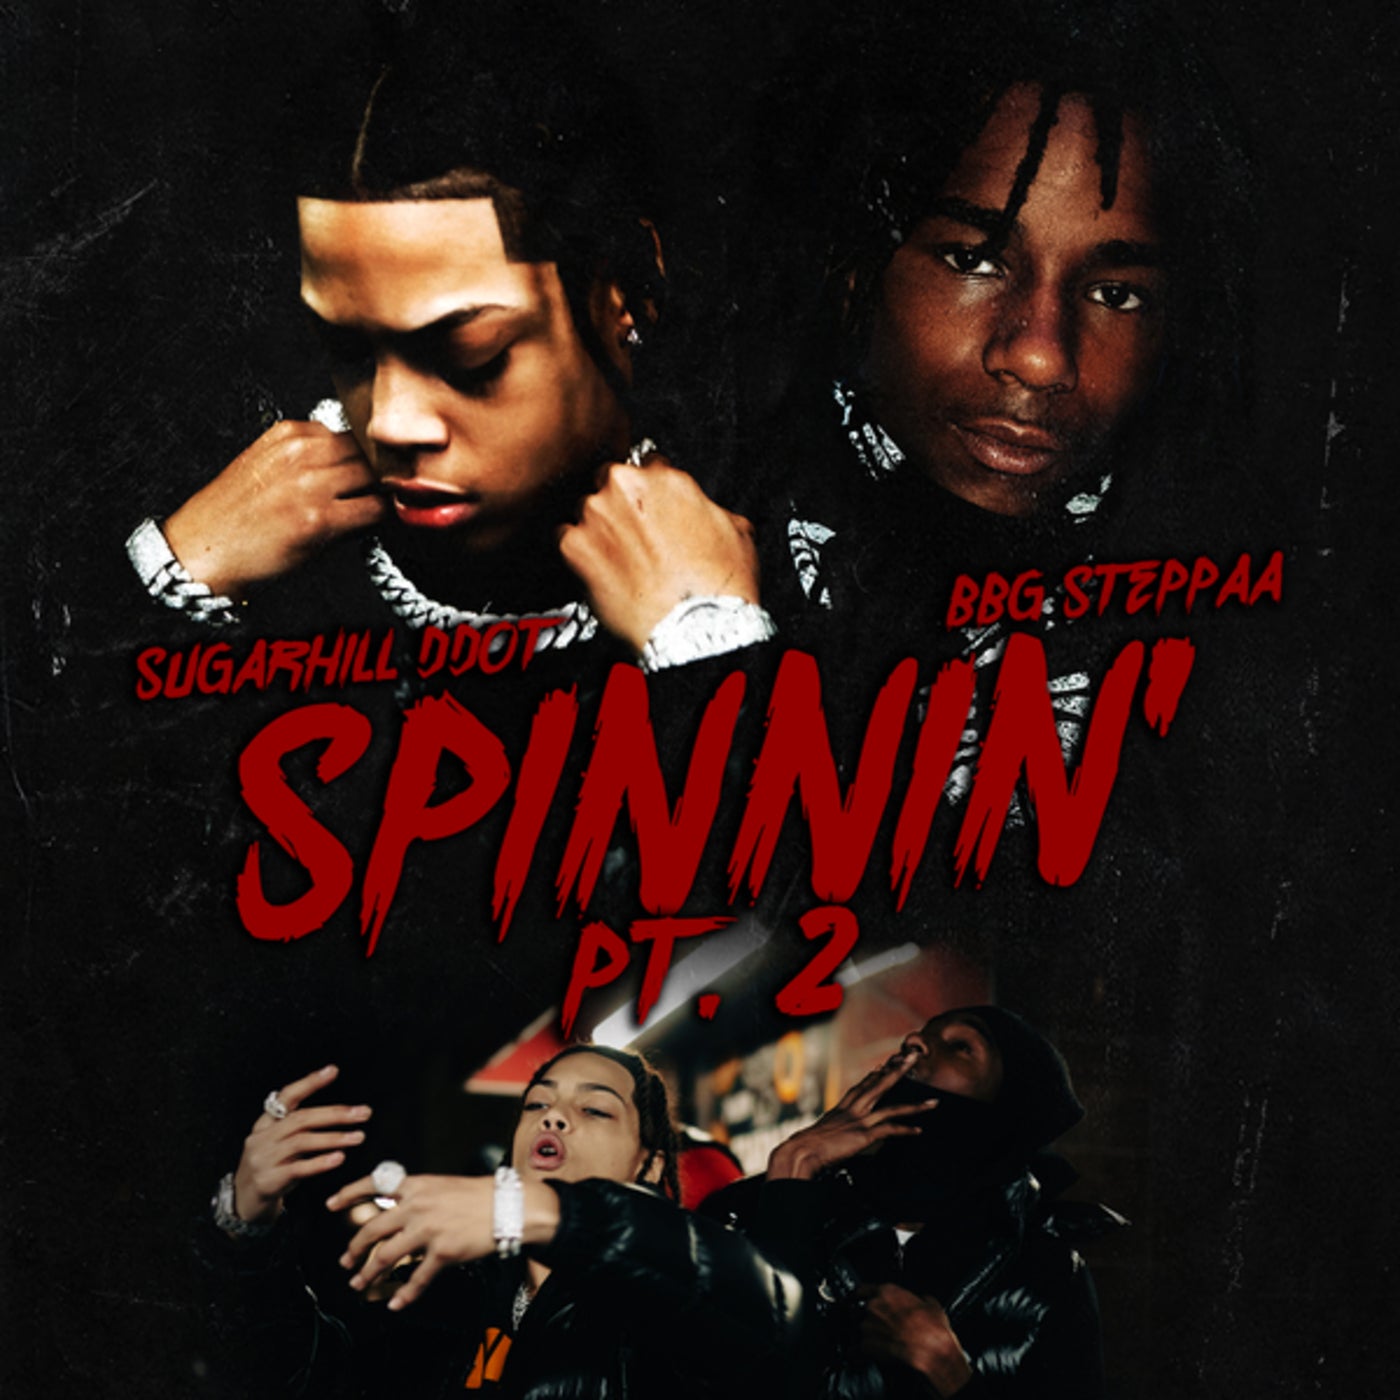 Spinnin' (Pt. 2) by SugarHill Ddot and BBG Steppaa on Beatsource